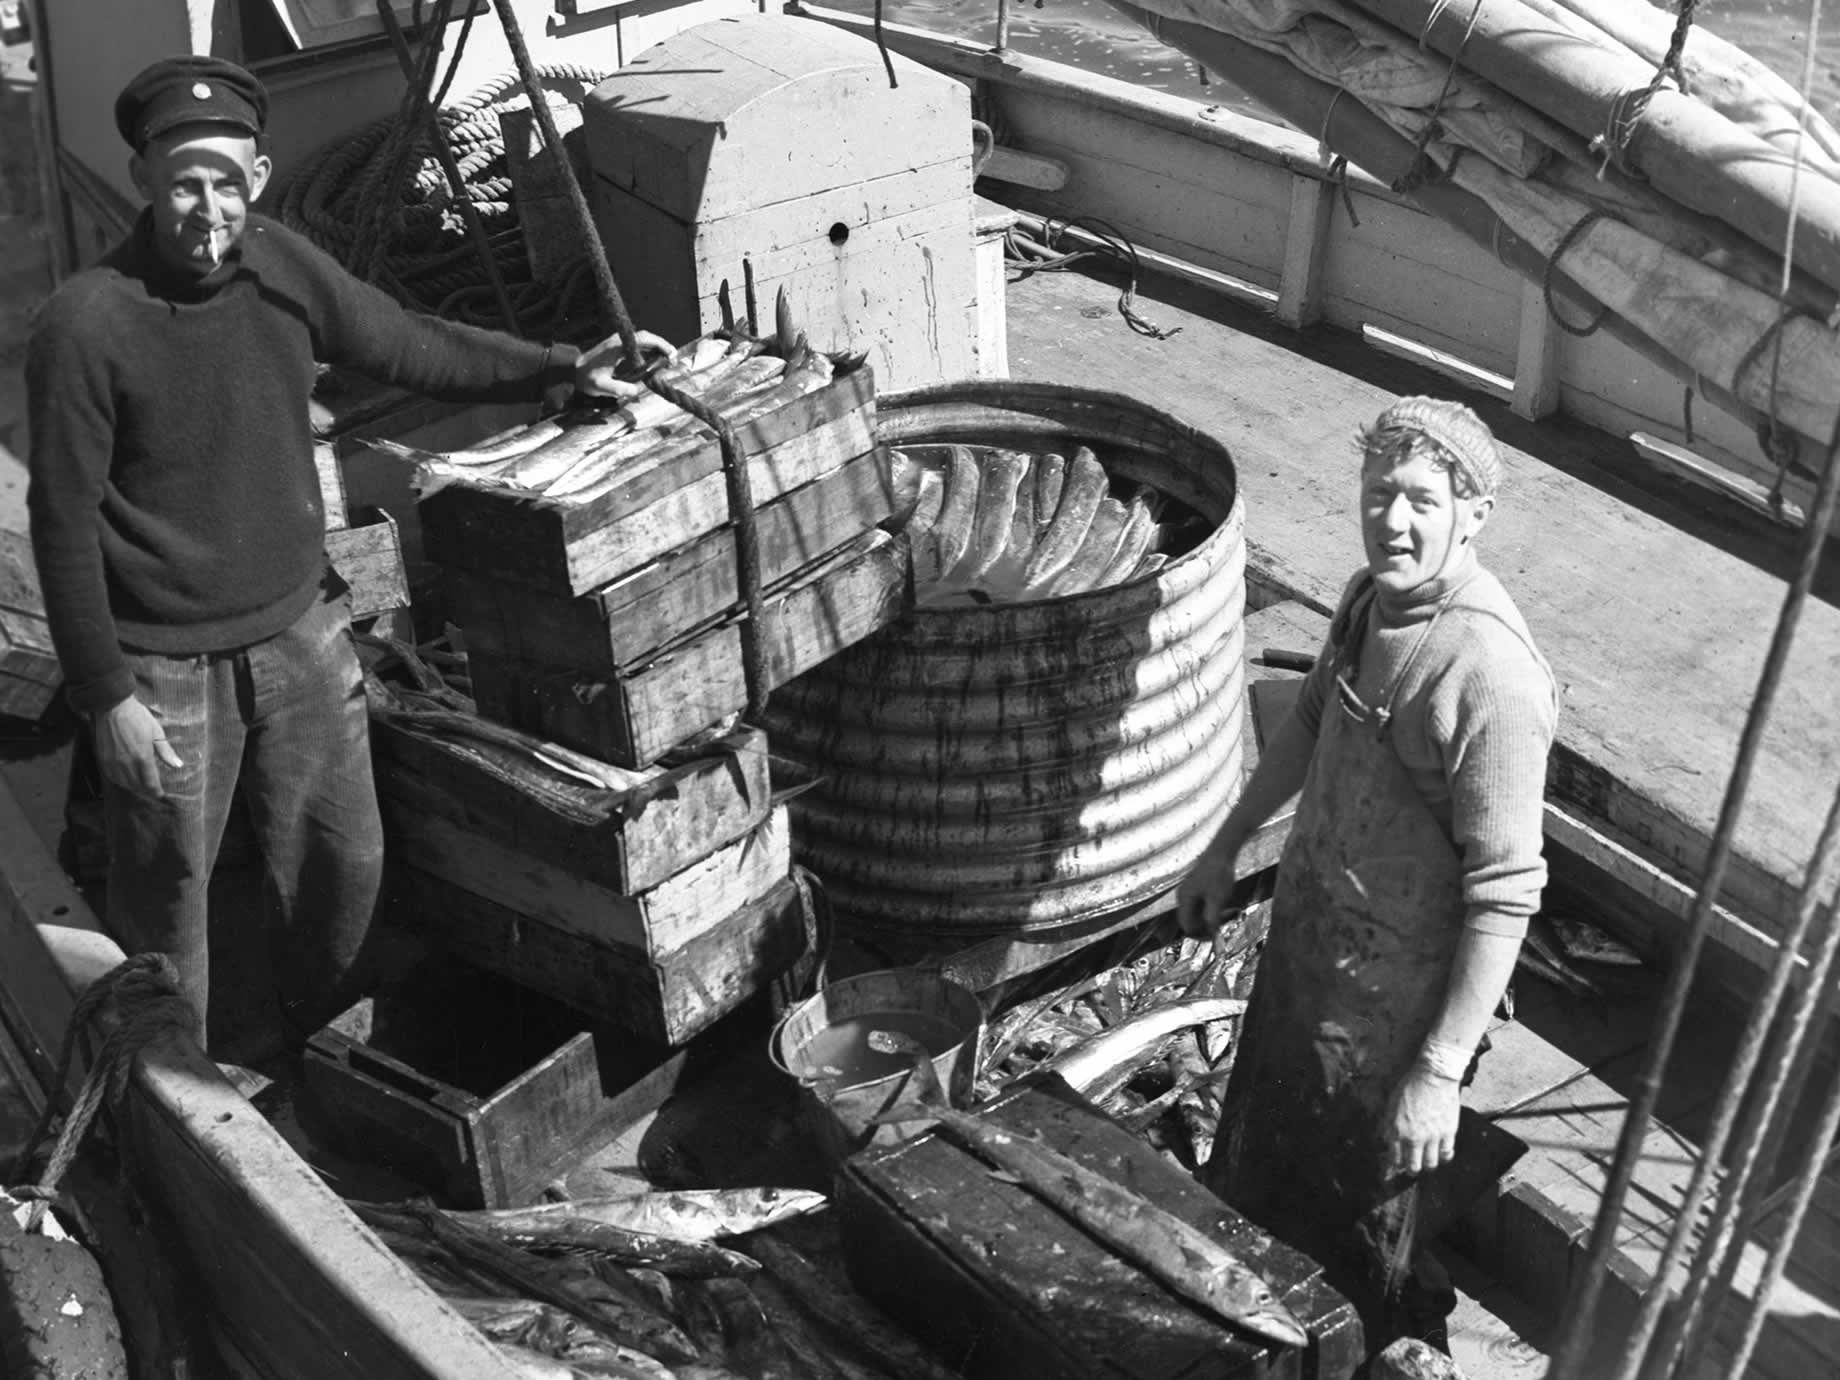 Fishermen working on board the ‘Helen’ in the 1920s